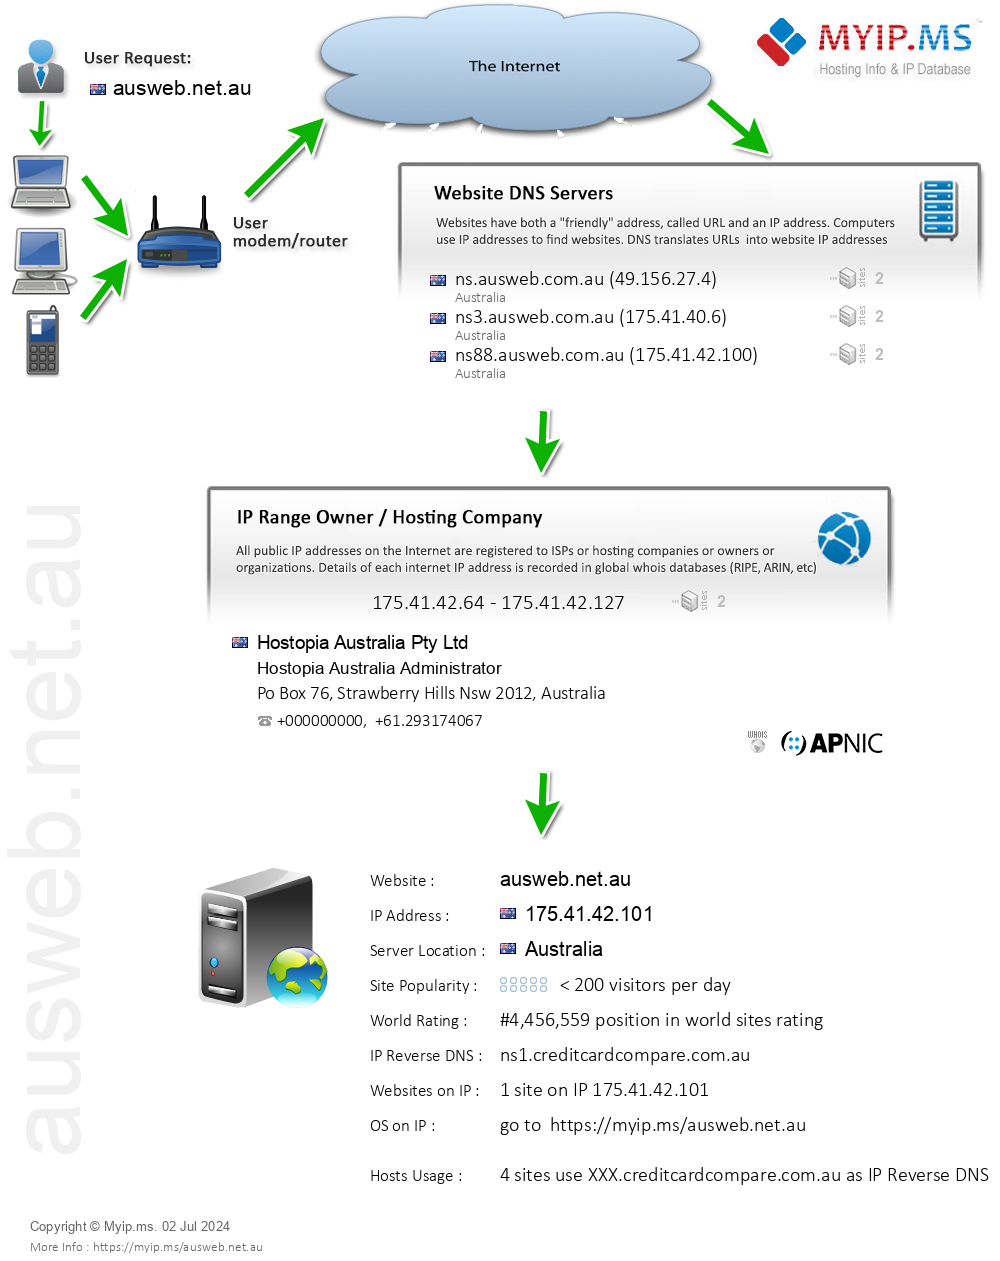 Ausweb.net.au - Website Hosting Visual IP Diagram